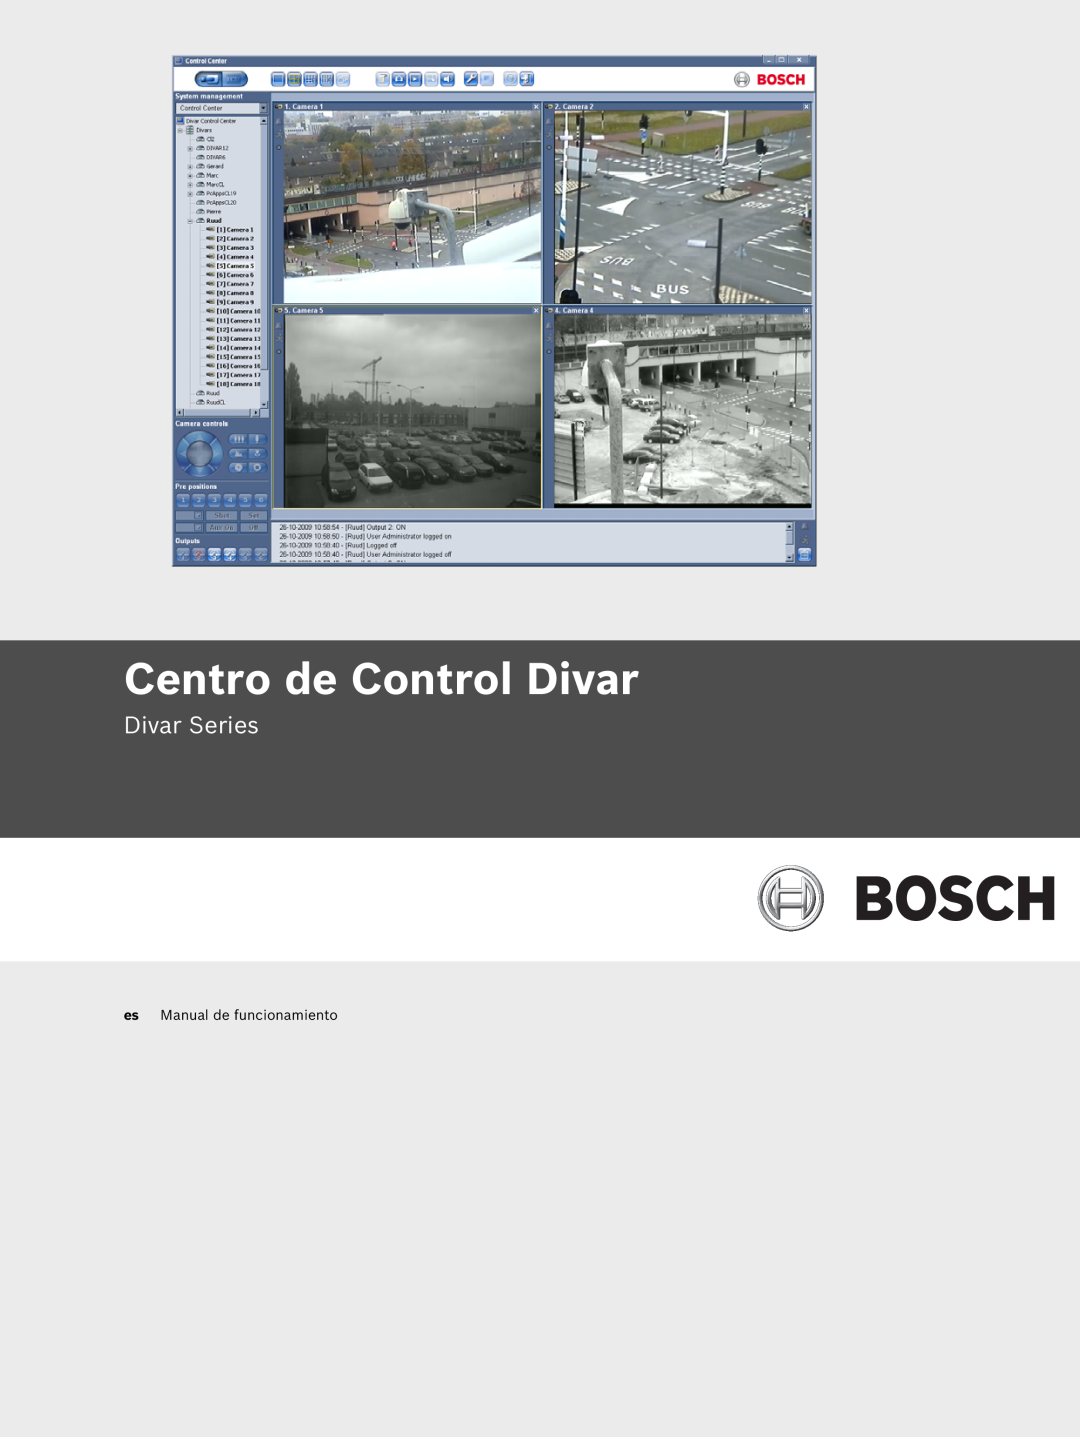 Bosch Appliances AR18-09-B014 manual Centro de Control Divar, Divar Series, es Manual de funcionamiento 